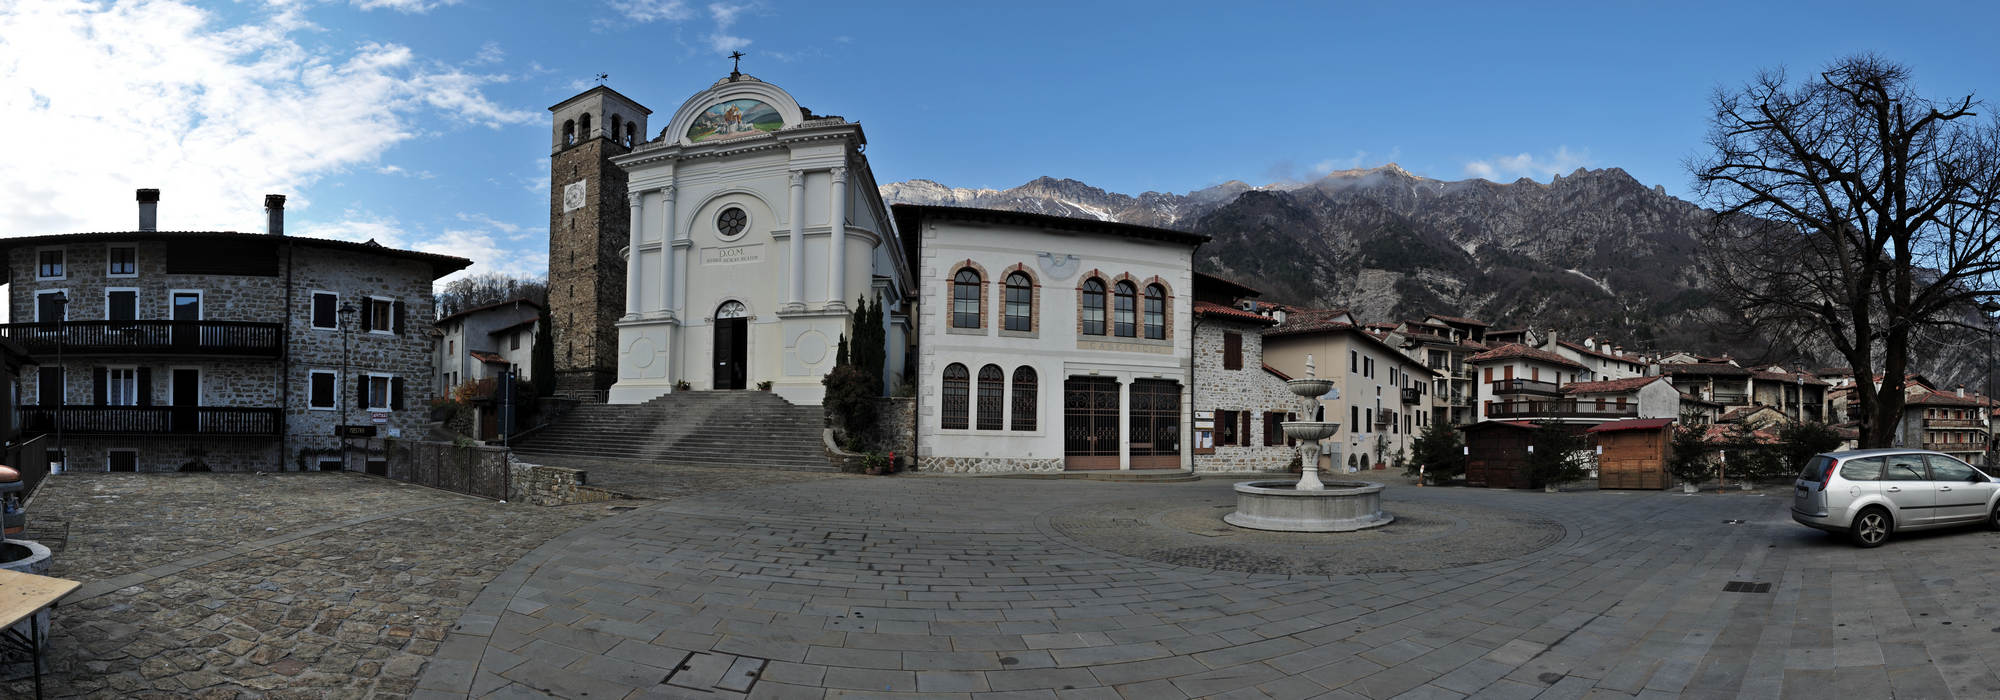 Poffabro di Frisanco, Maniago Friuli